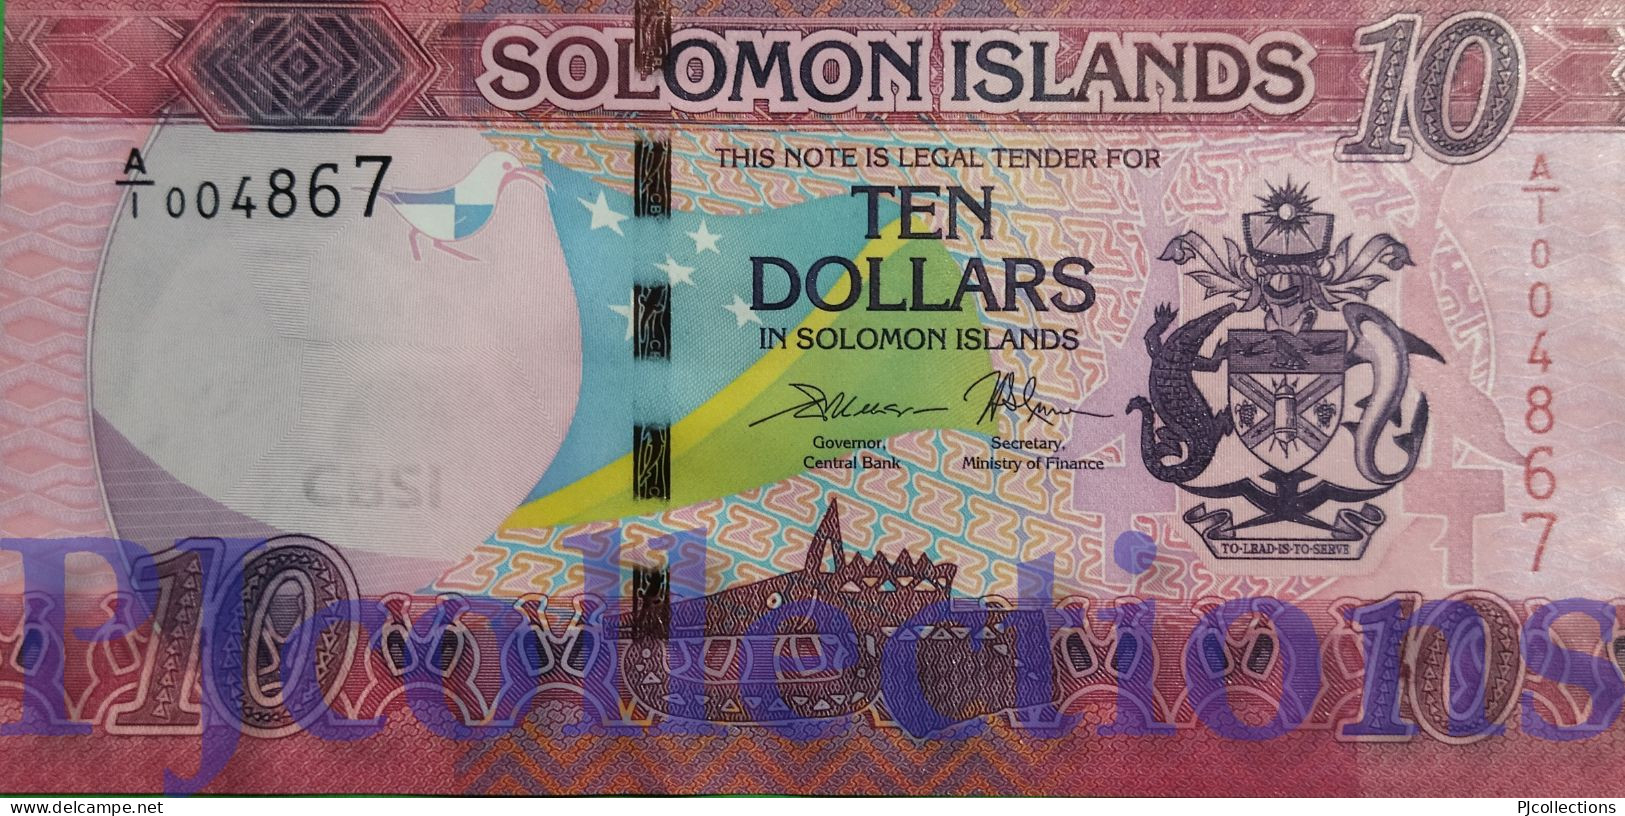 SOLOMON ISLANDS 10 DOLLARS 2017 PICK 33 UNC LOW SERIAL NUMBER "A/1 0048**" - Salomonseilanden